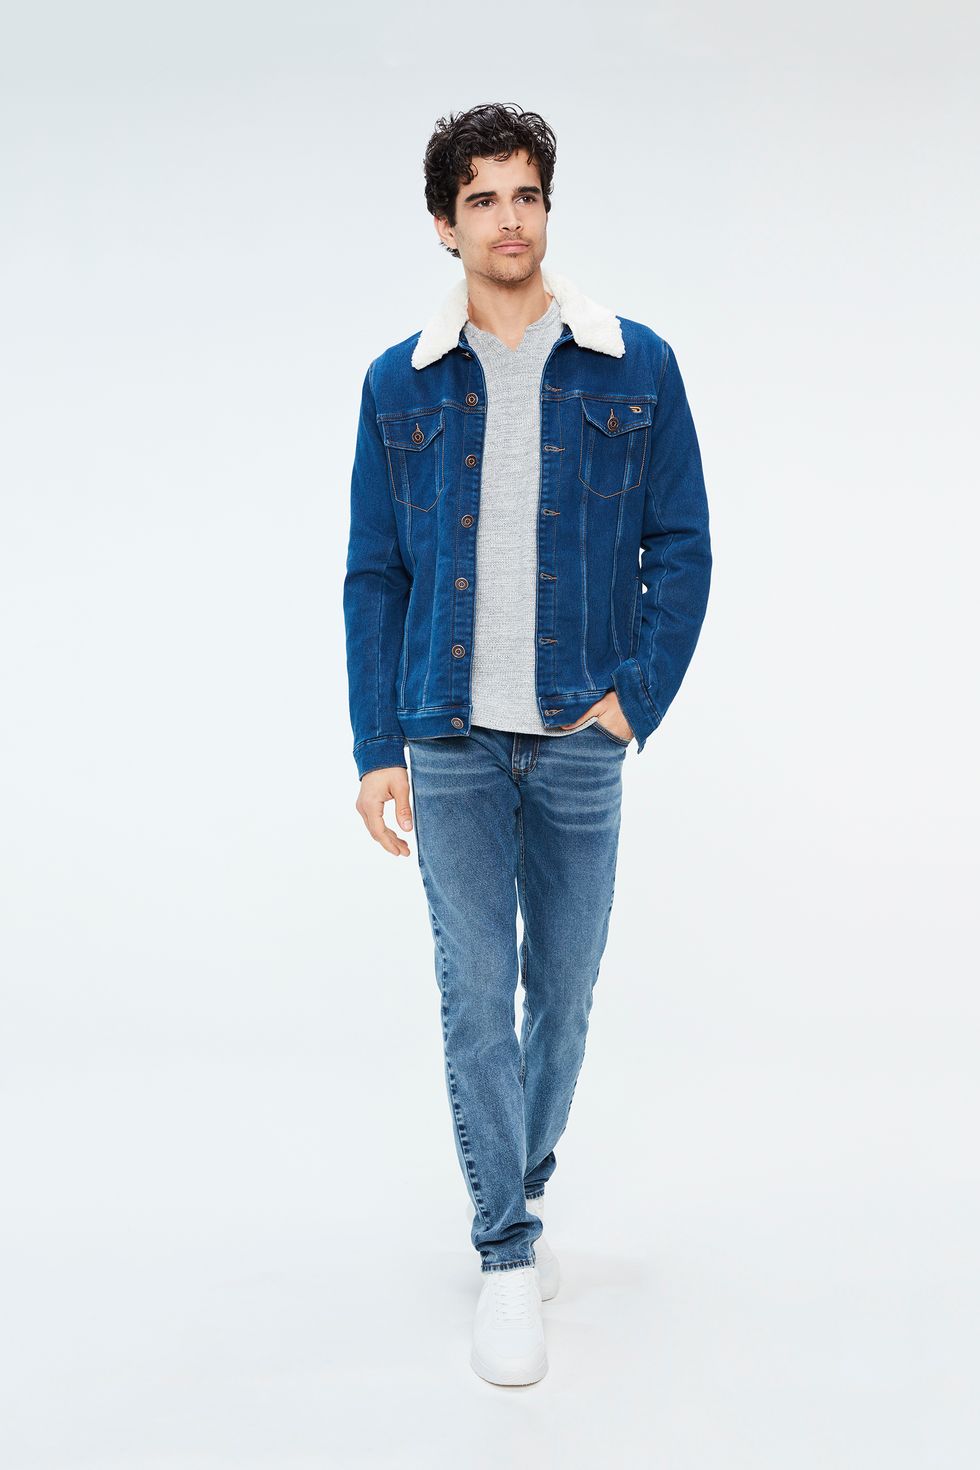 jaquetas masculinas jeans